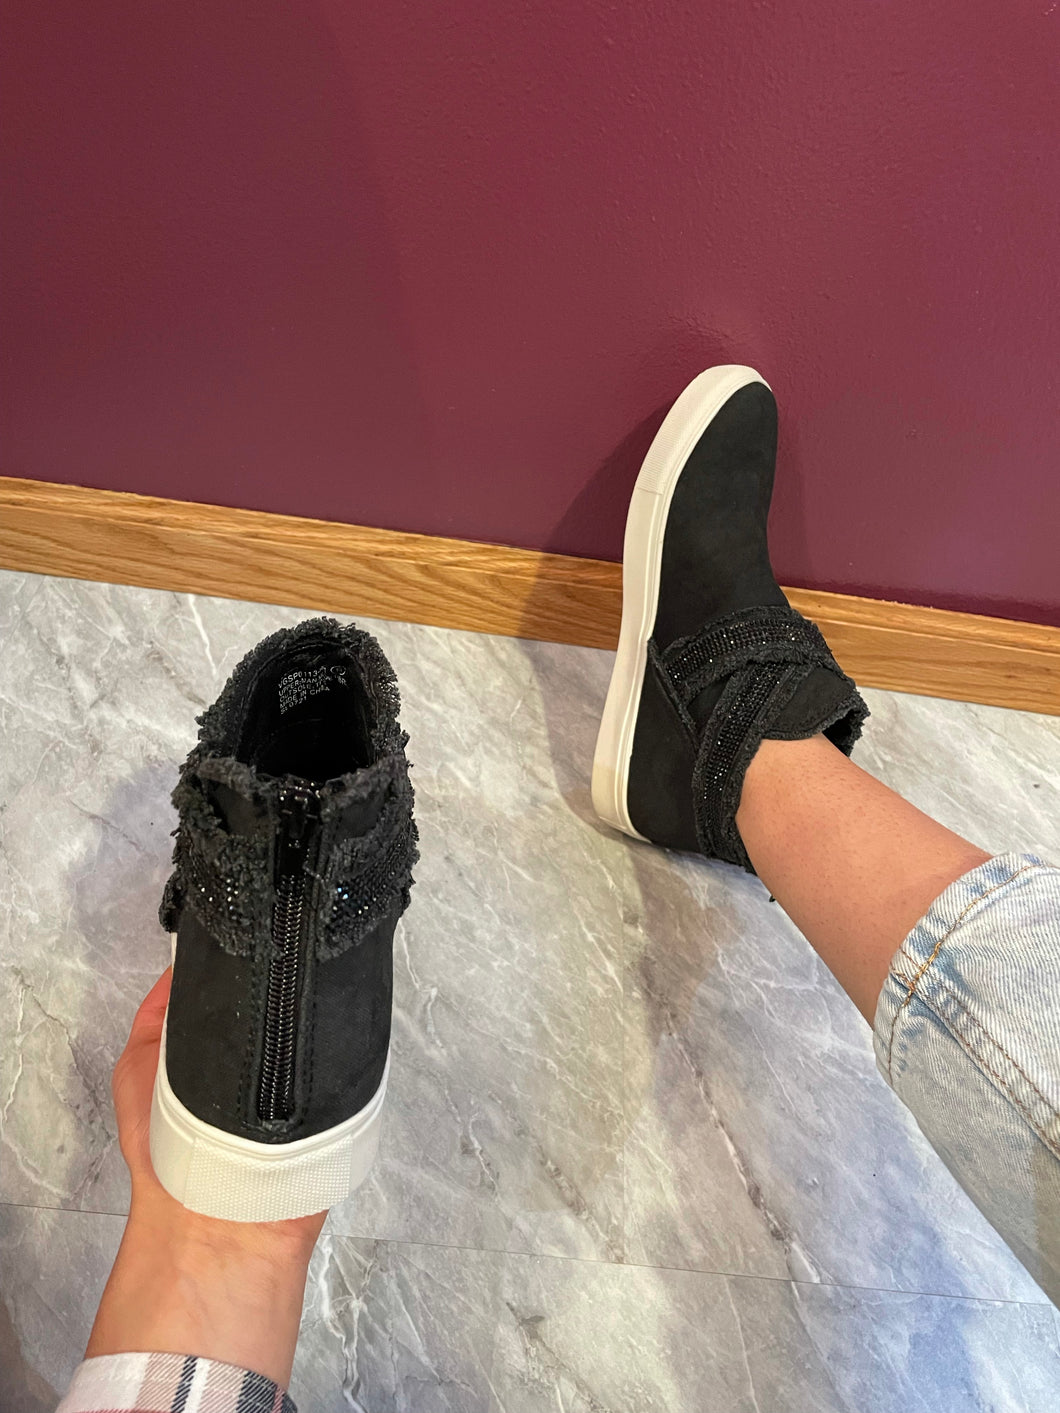 Black ankle booties